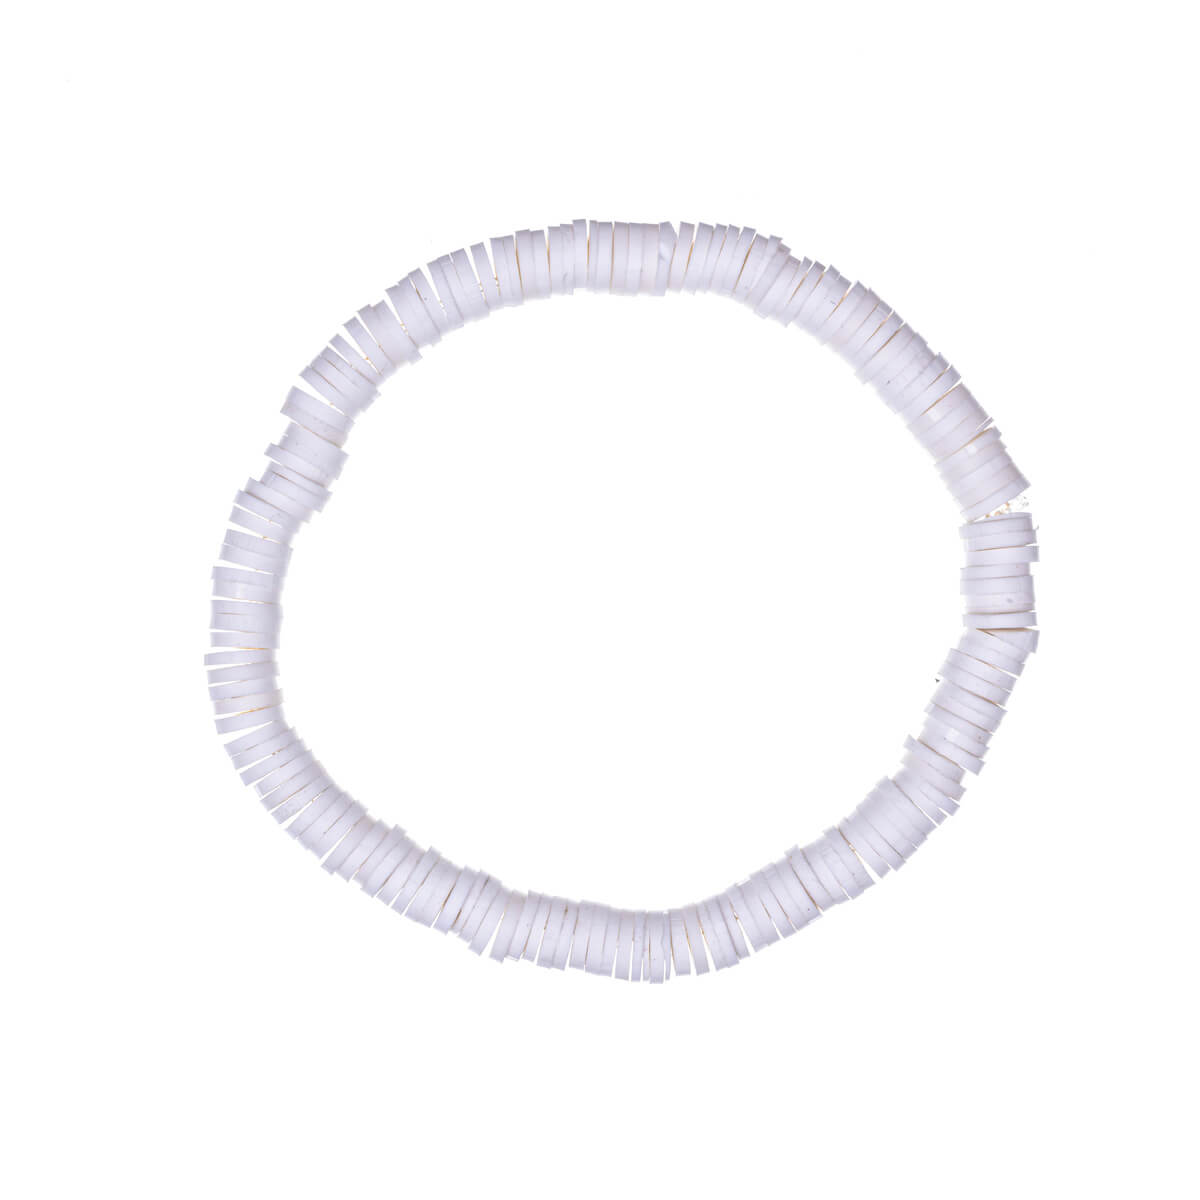 Flexible white bracelet with plastic beads